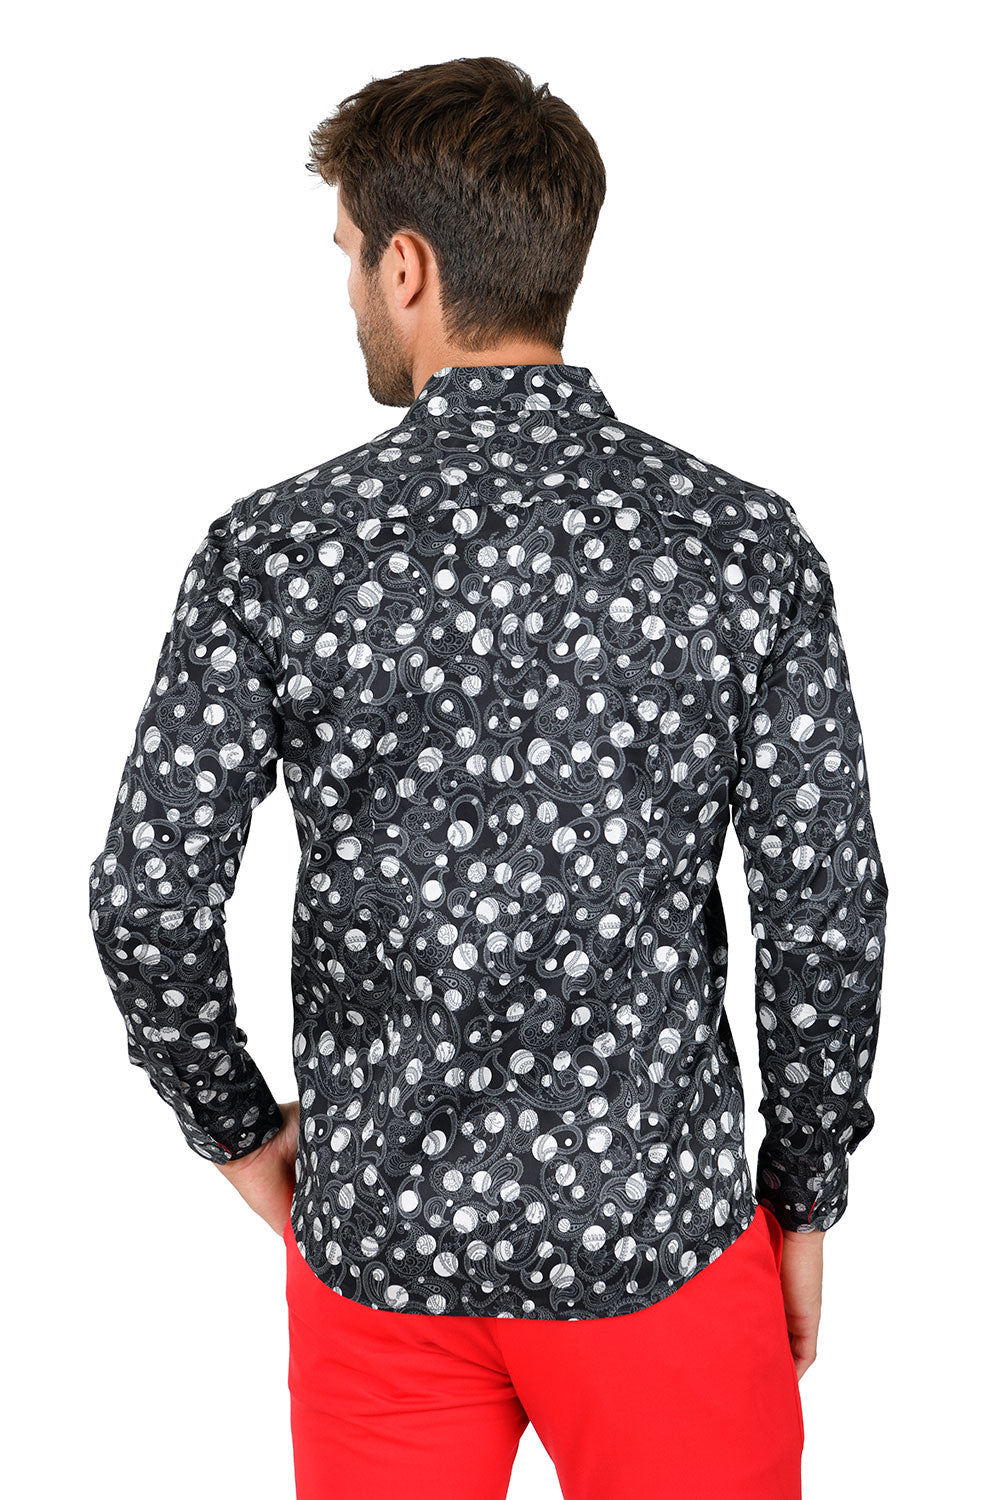 BARABAS men's floral paisley polka dotted printed shirts B339 Black and White 